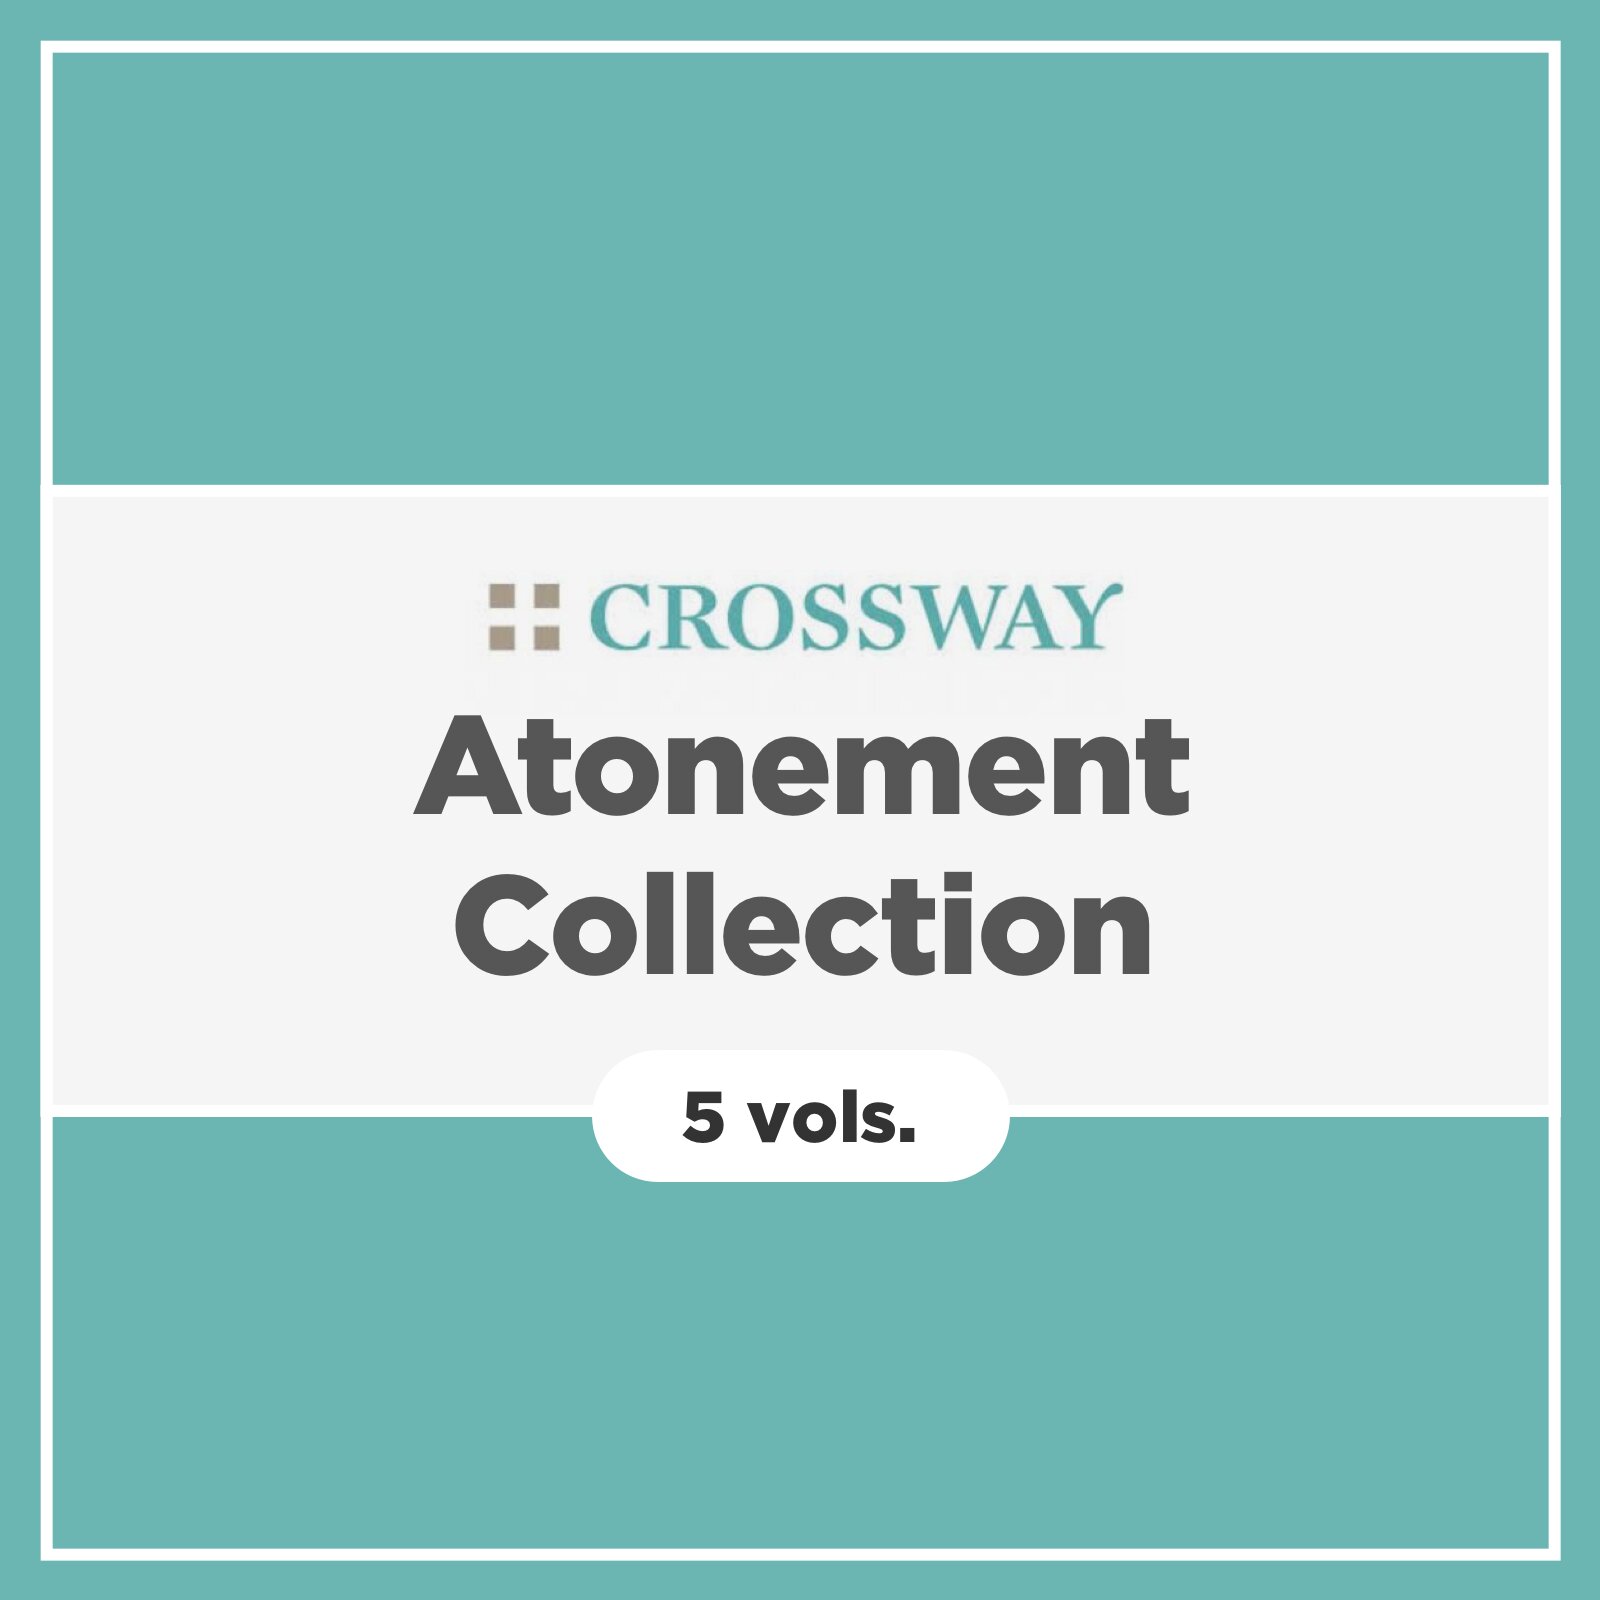 Crossway Atonement Collection (5 vols.)